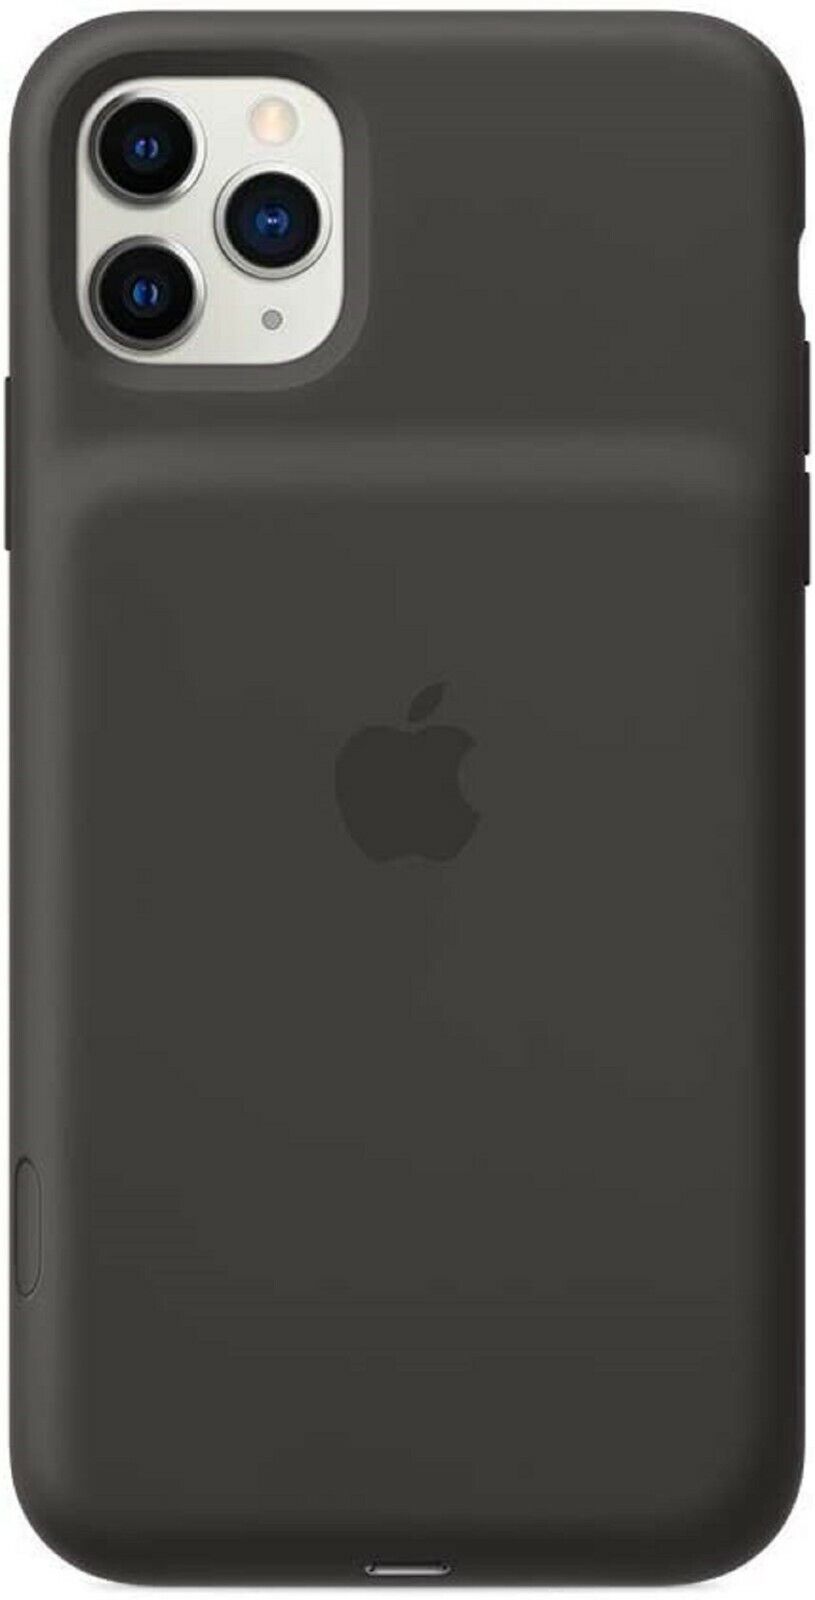 Genuine Apple iPhone 11 Pro Max Smart Battery Case 